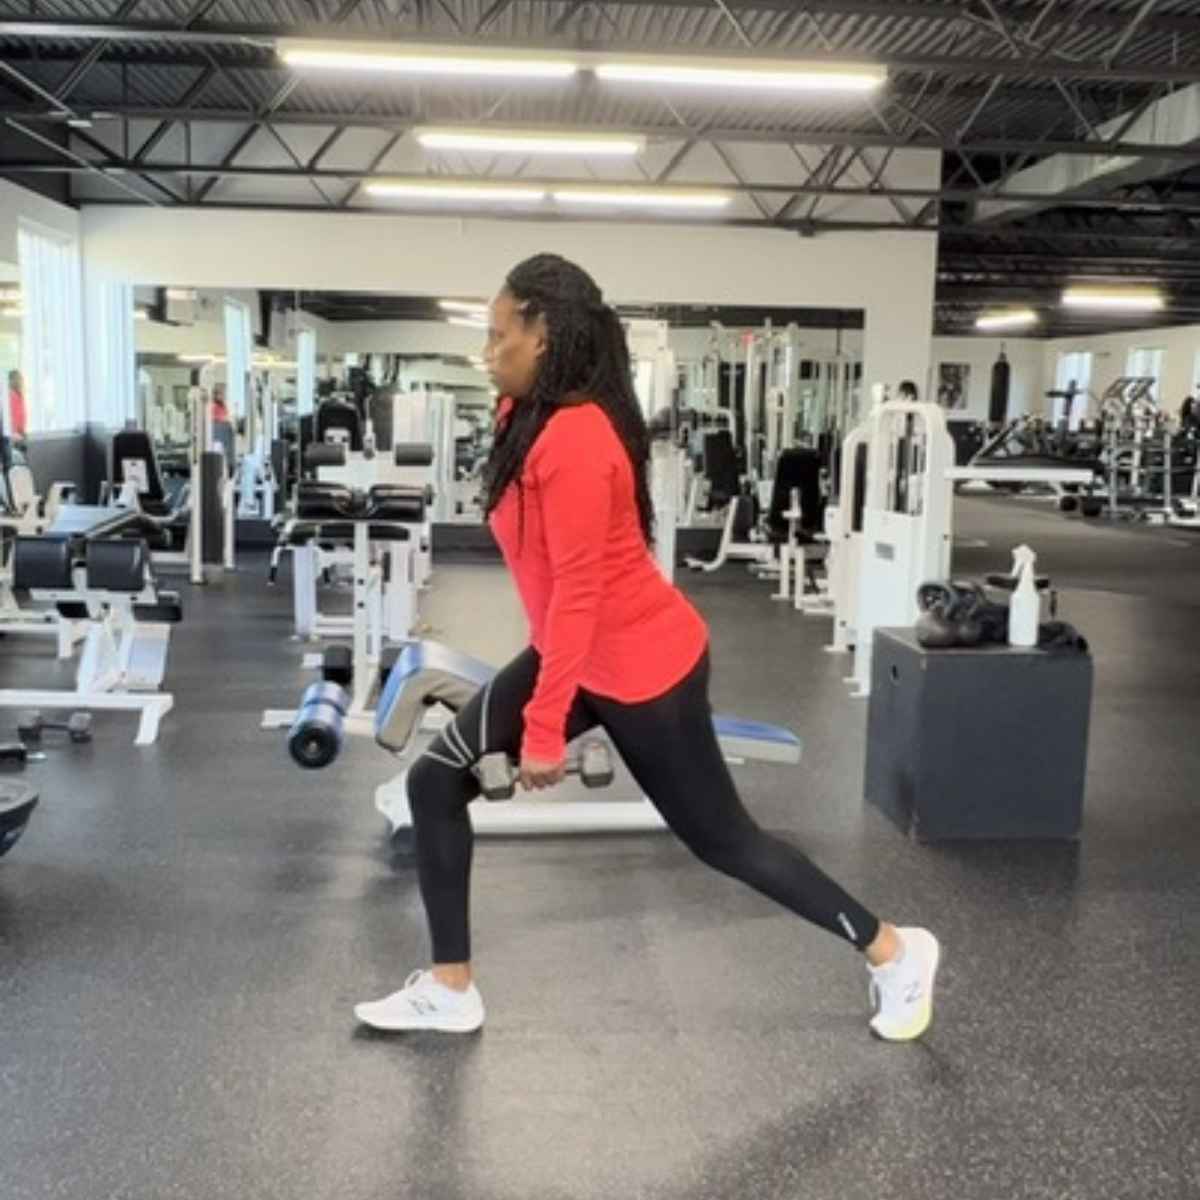 Split squat benefits: Build stronger legs, better balance